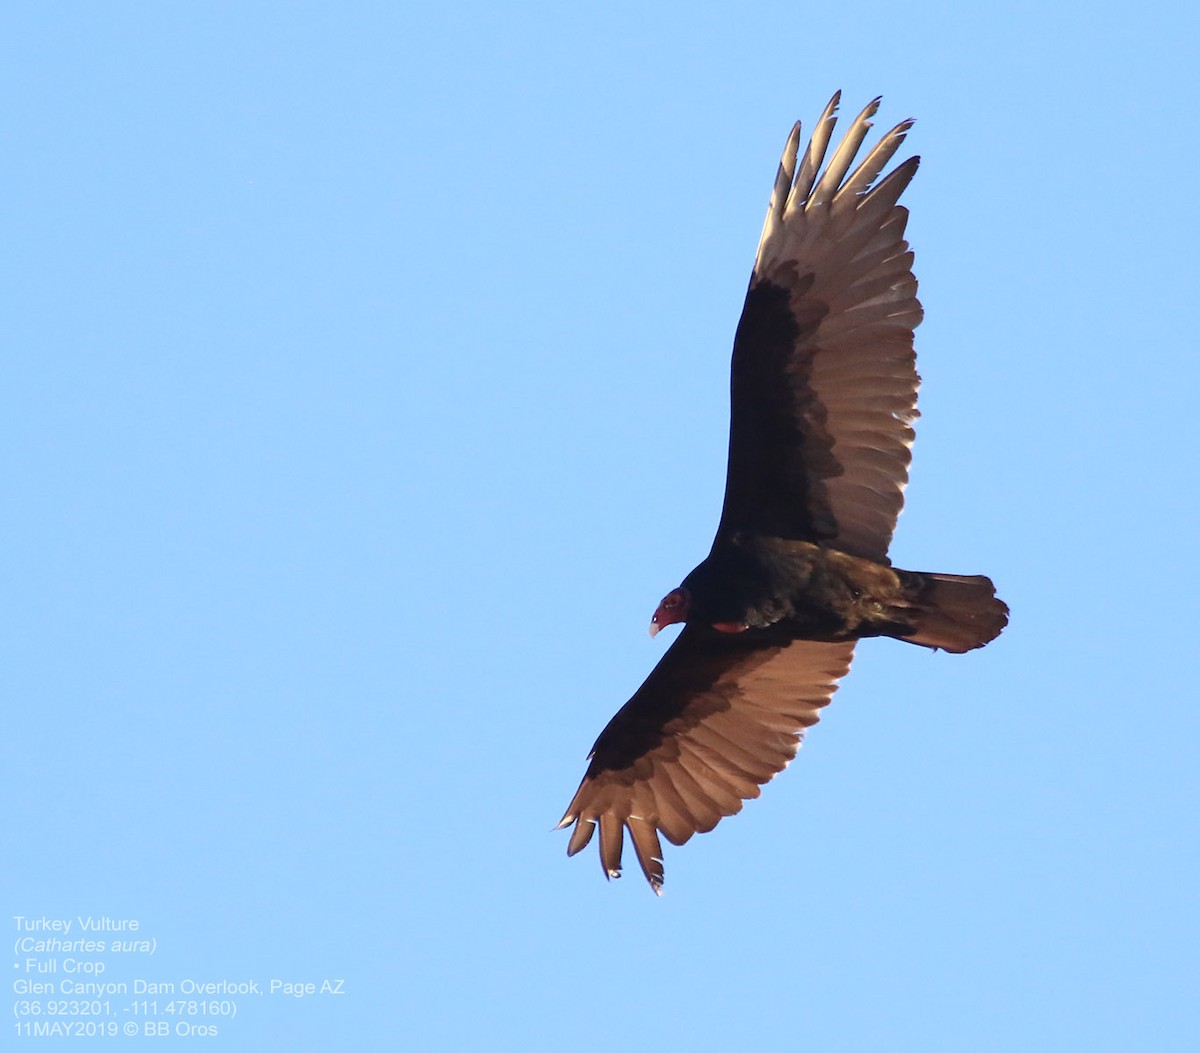 Turkey Vulture - BB Oros